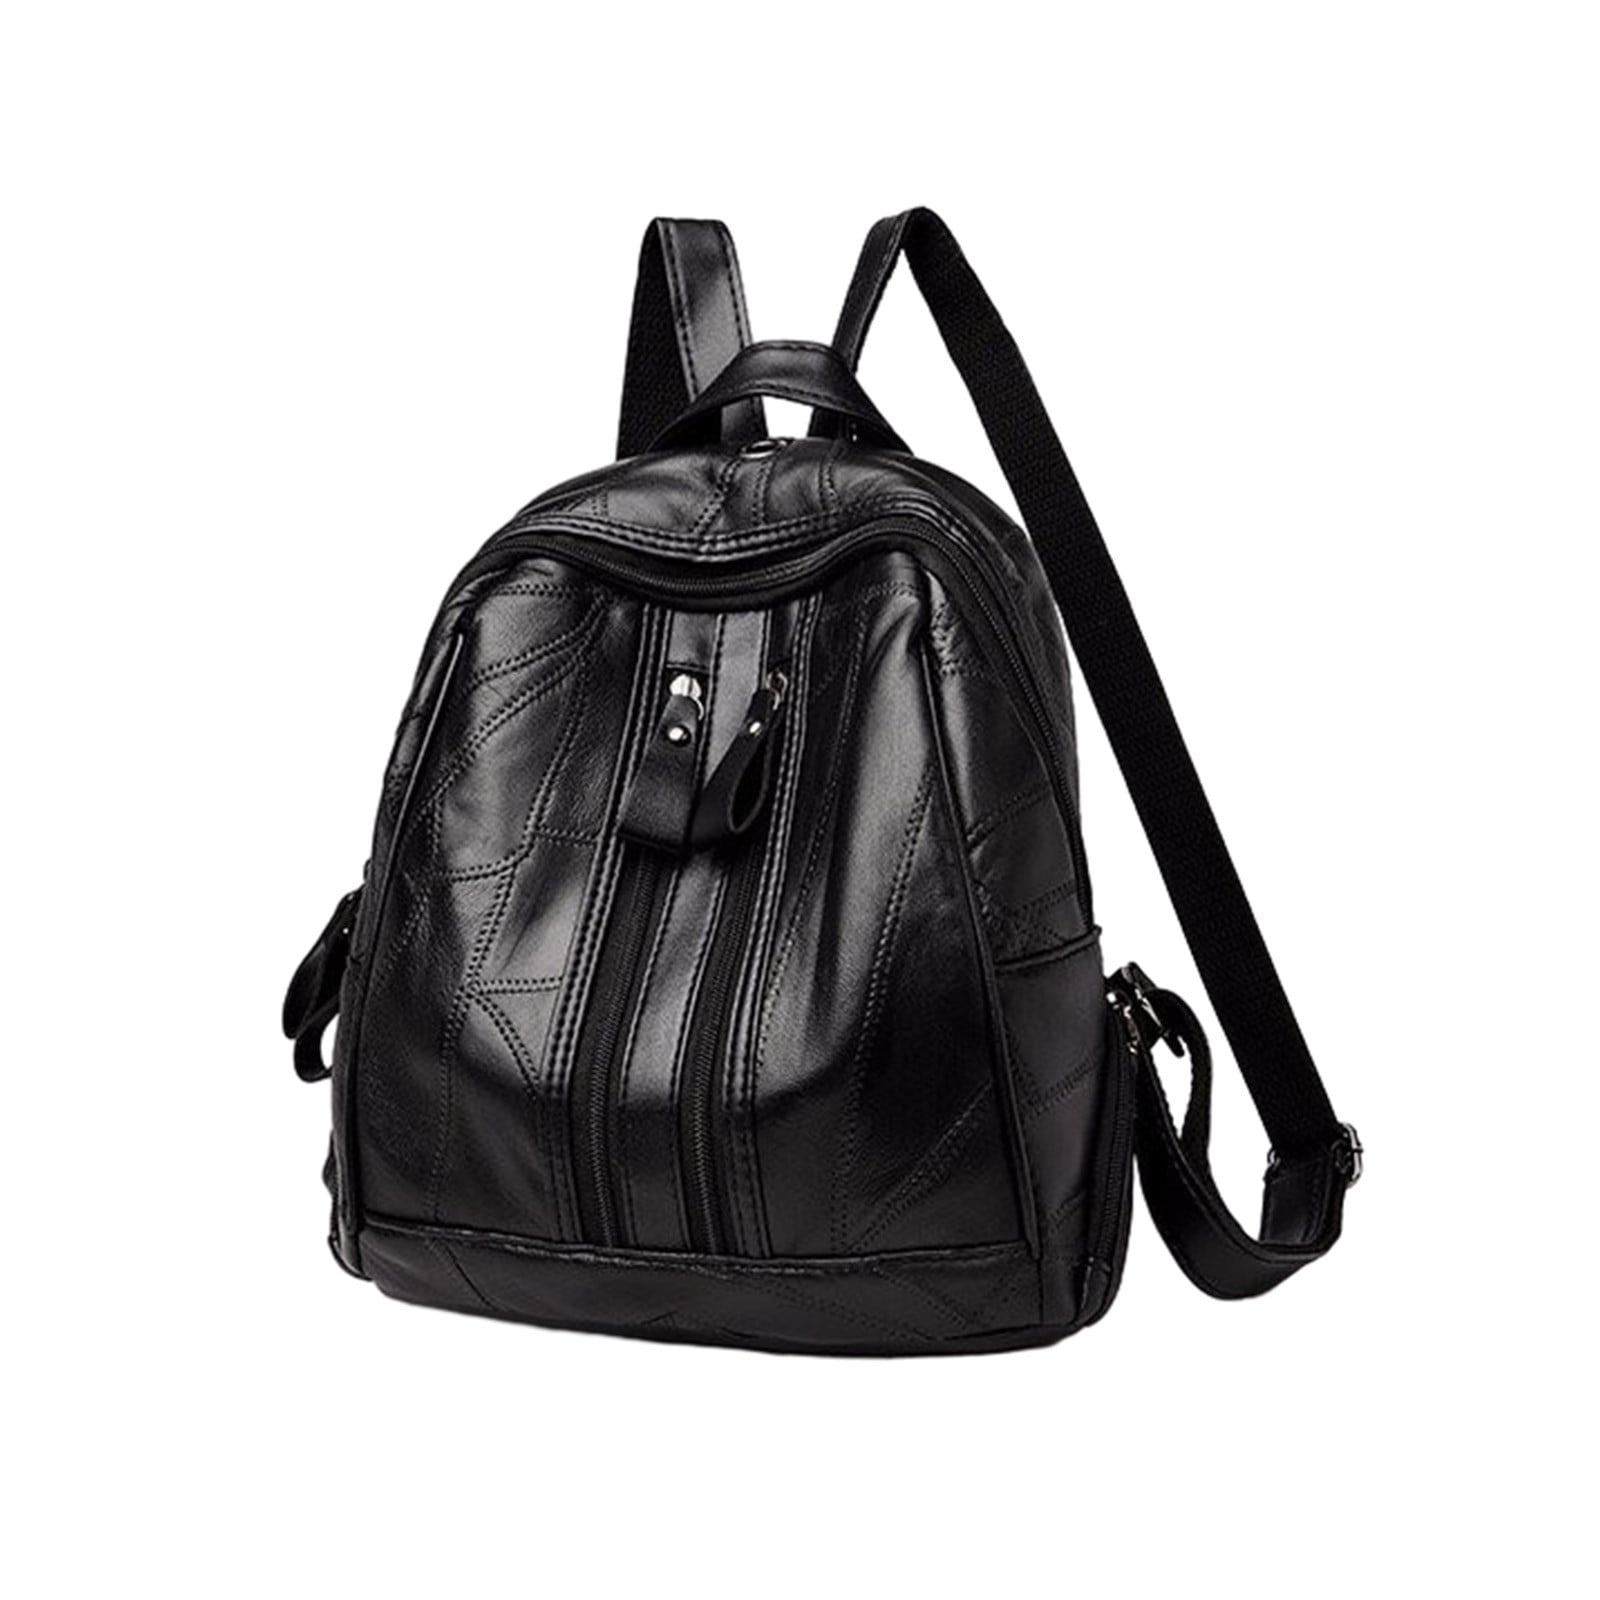 Backpack Purse For Women,Fashion Leather Handbag,Travel Bag,Satchel ...